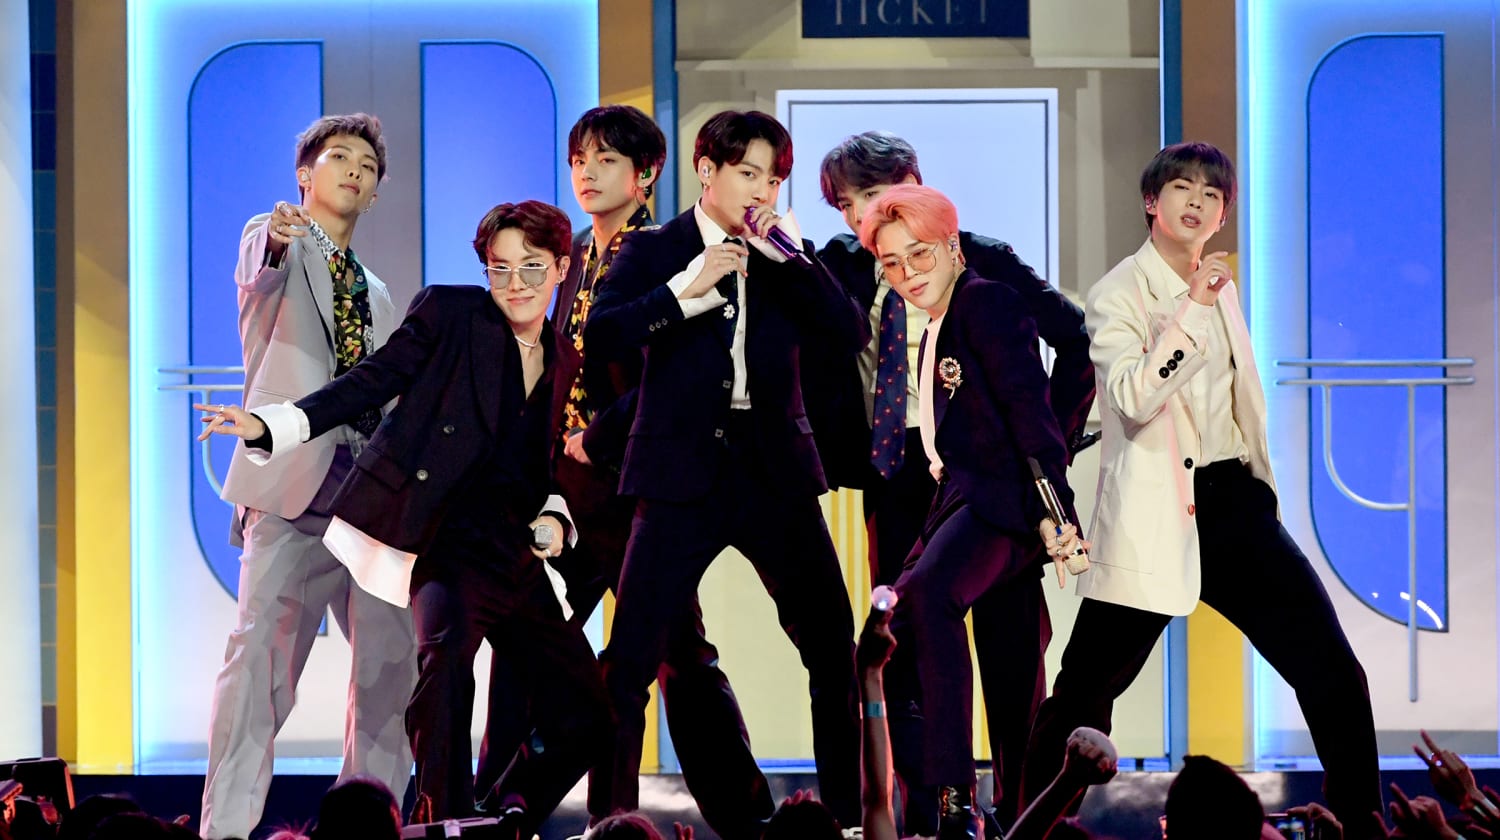 Grammys 2019: BTS Talk Attending Show: 'Dream Come True